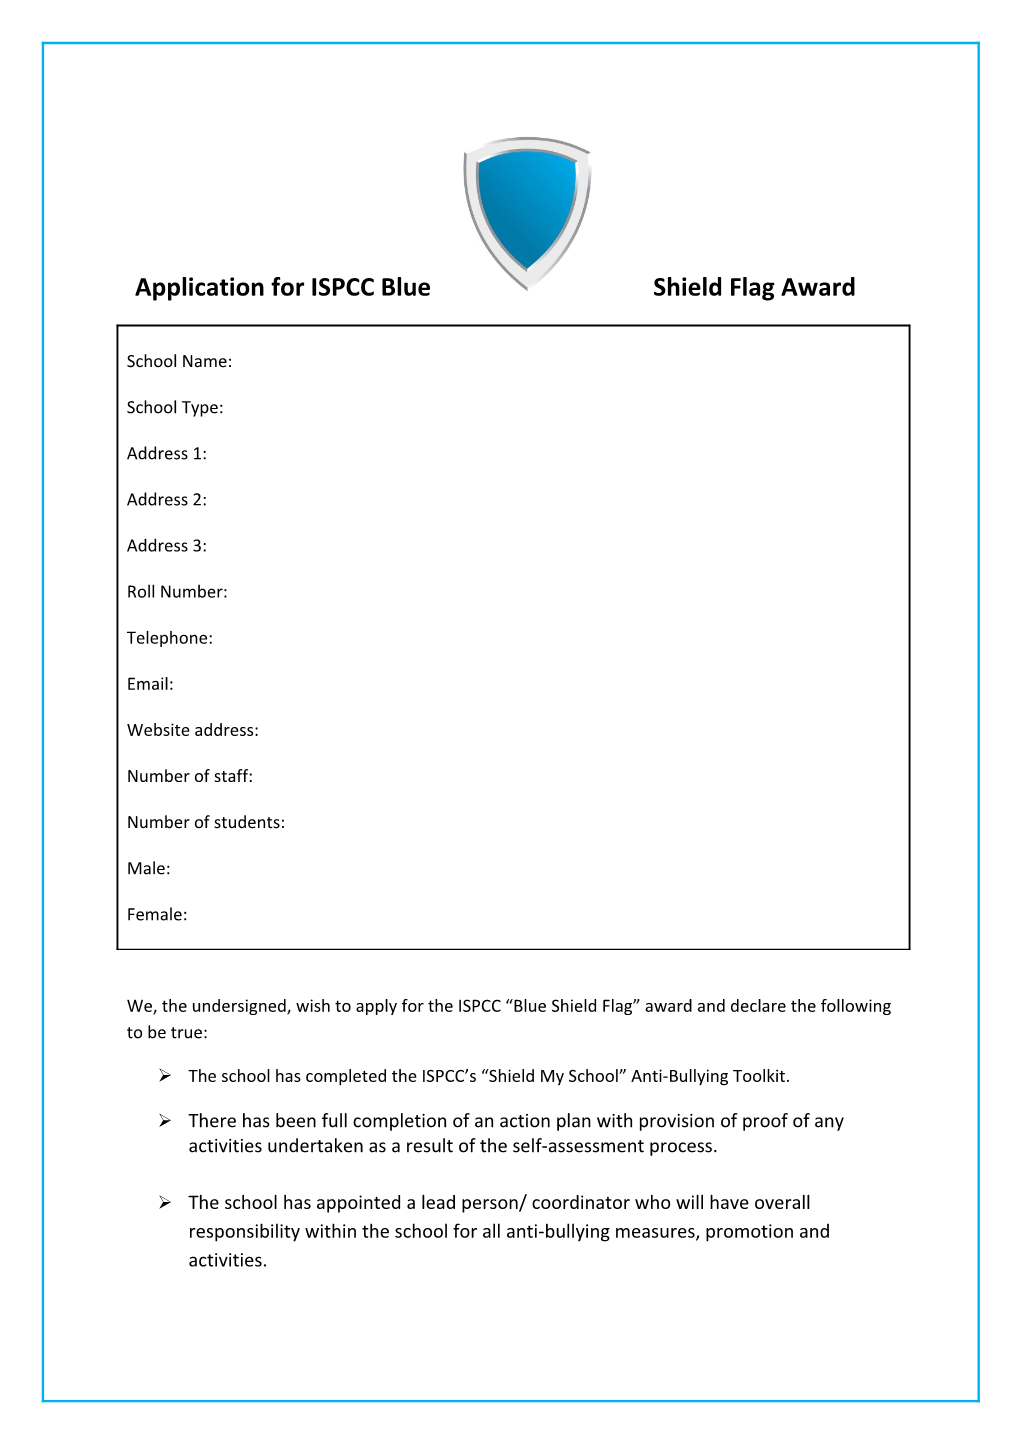 Application for ISPCC Blue Shield Flag Award